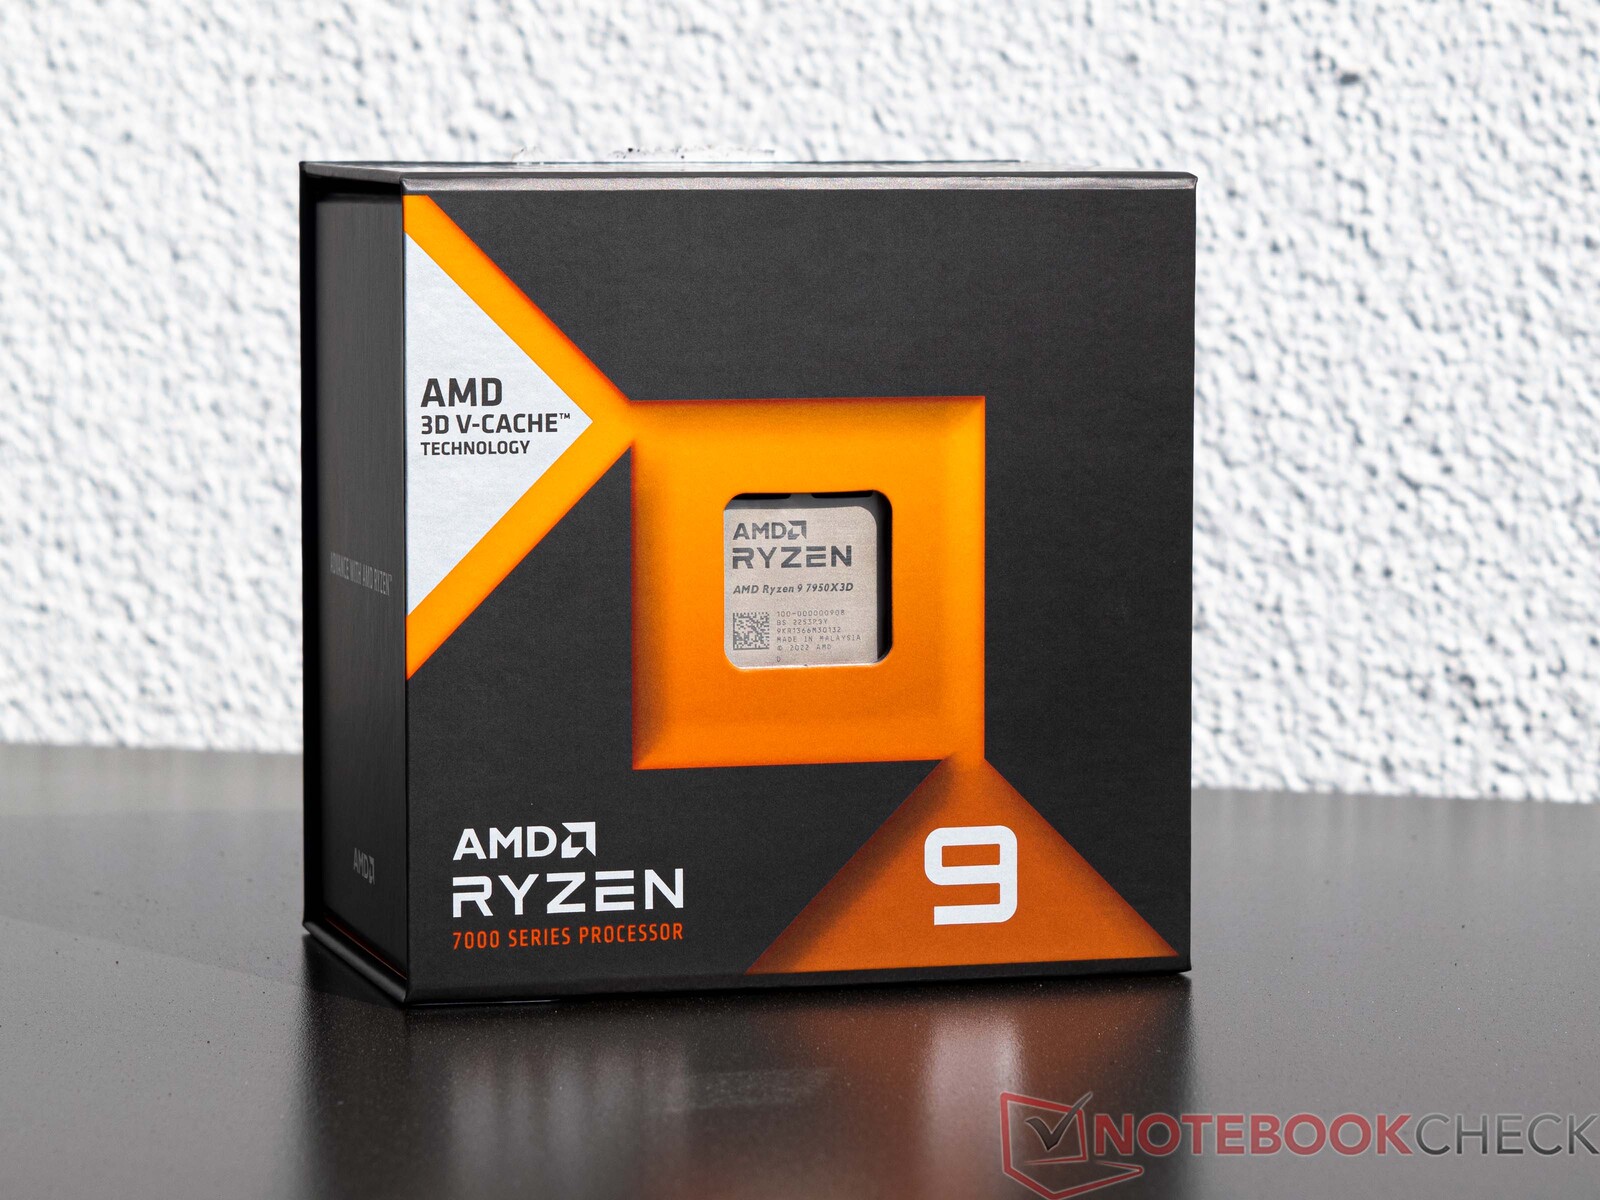 AMD Ryzen 9 7950X review